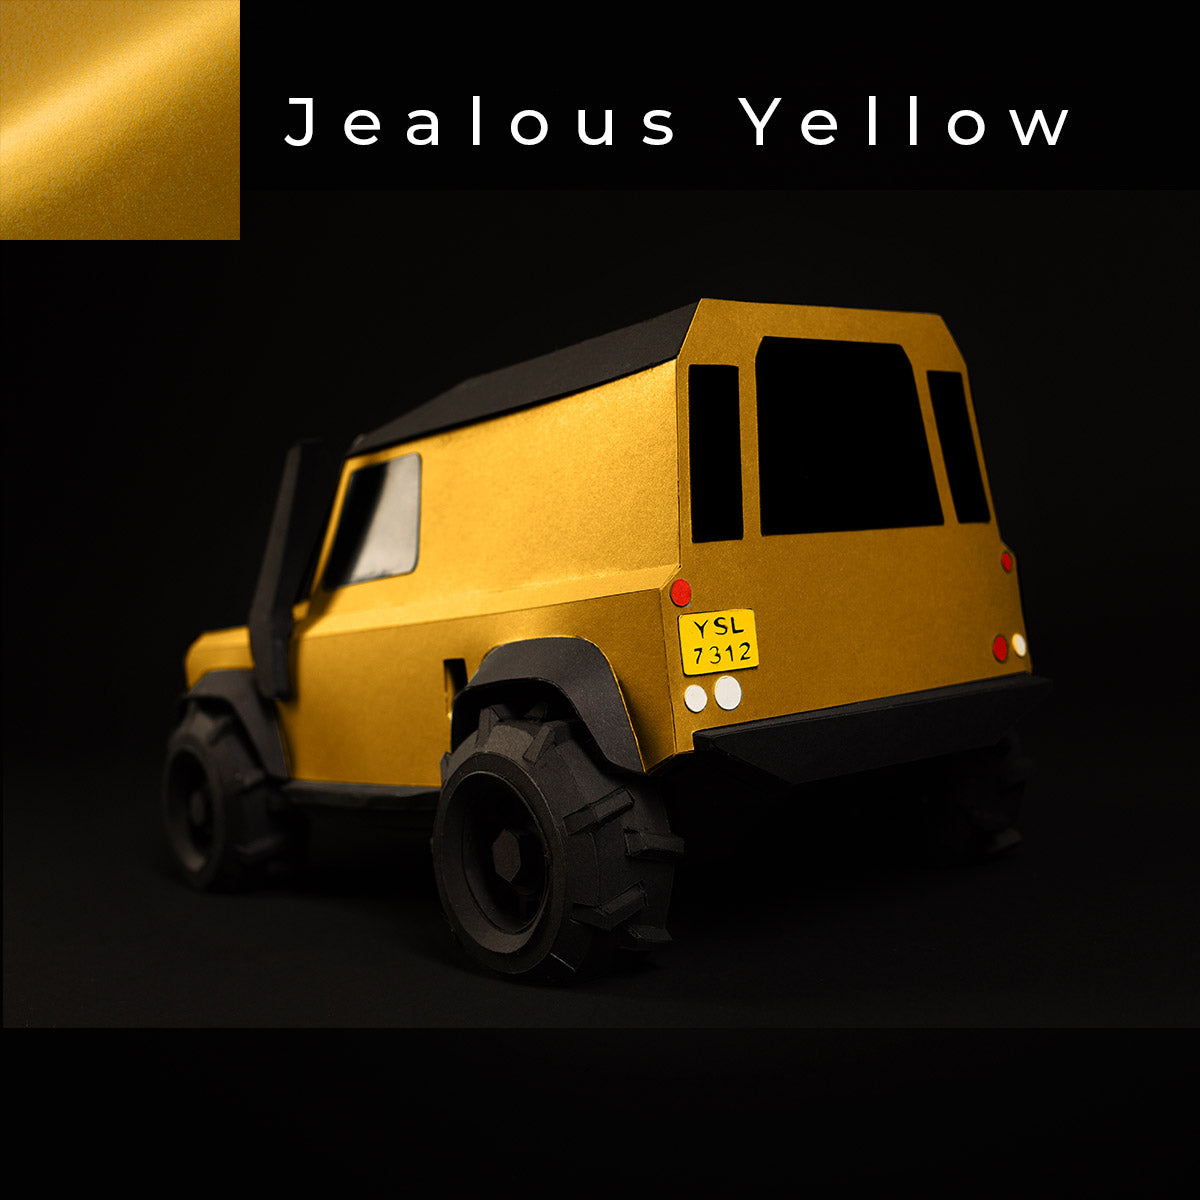  Offroad Papercraft Car Sculpture Kit - Geländewagen Verteidiger - Jealous Yellow